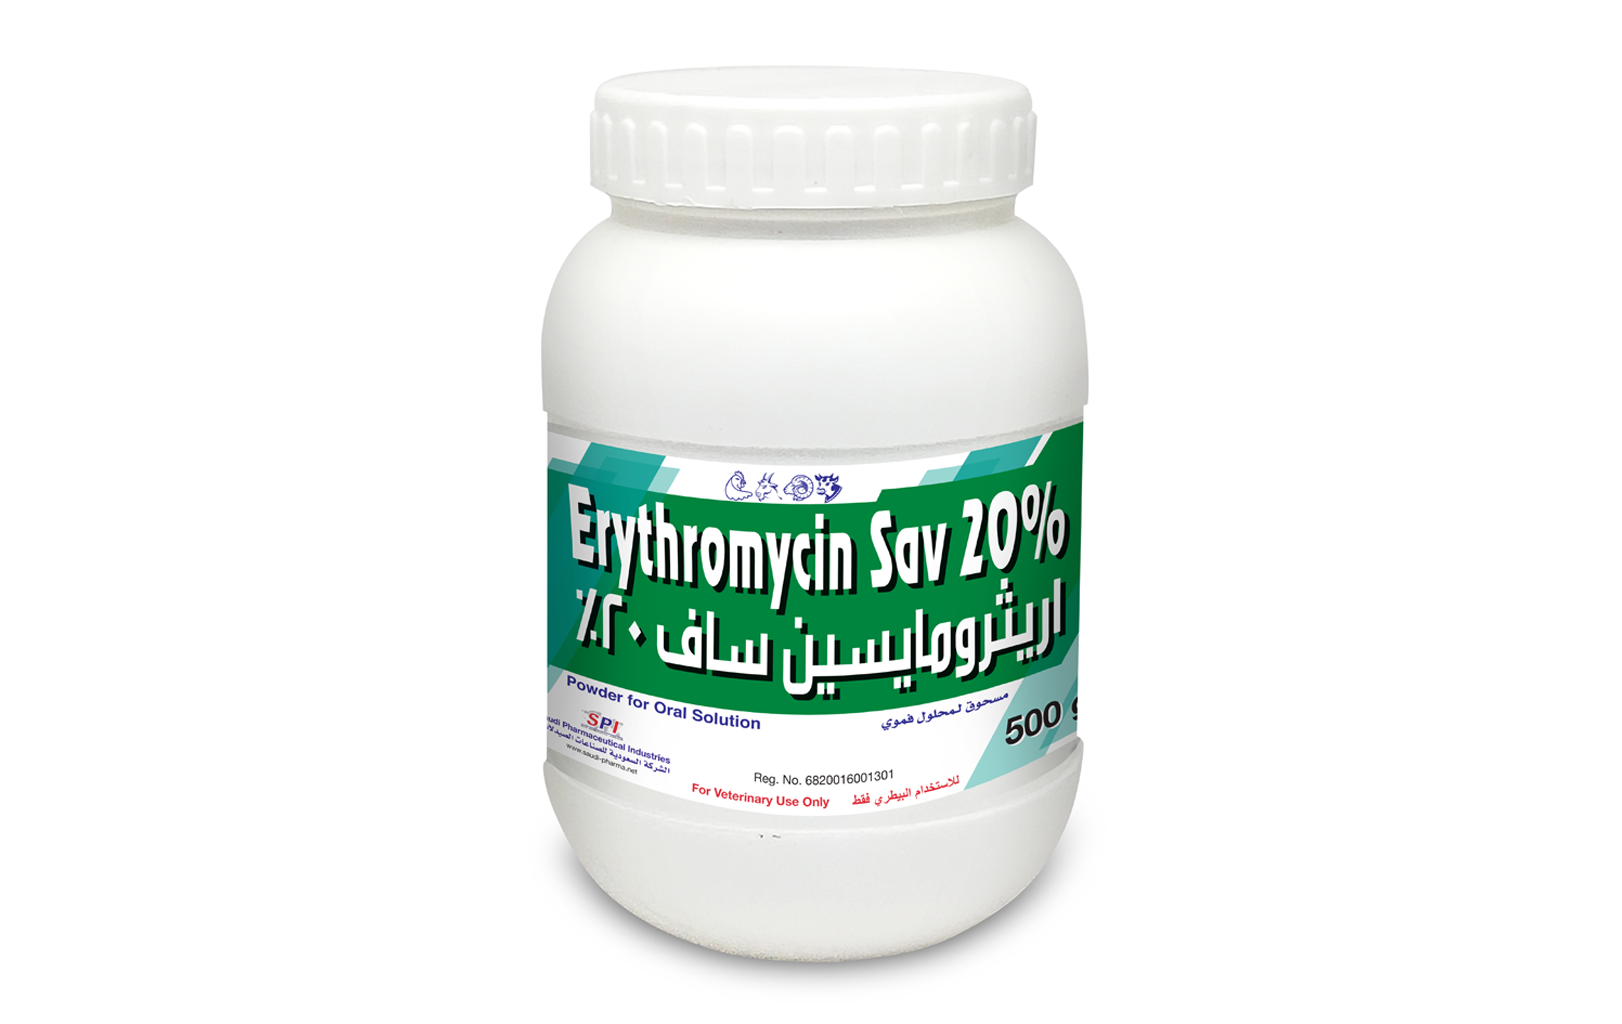 Erythromycin Sav 20% Powder for Oral Solution (500 g)